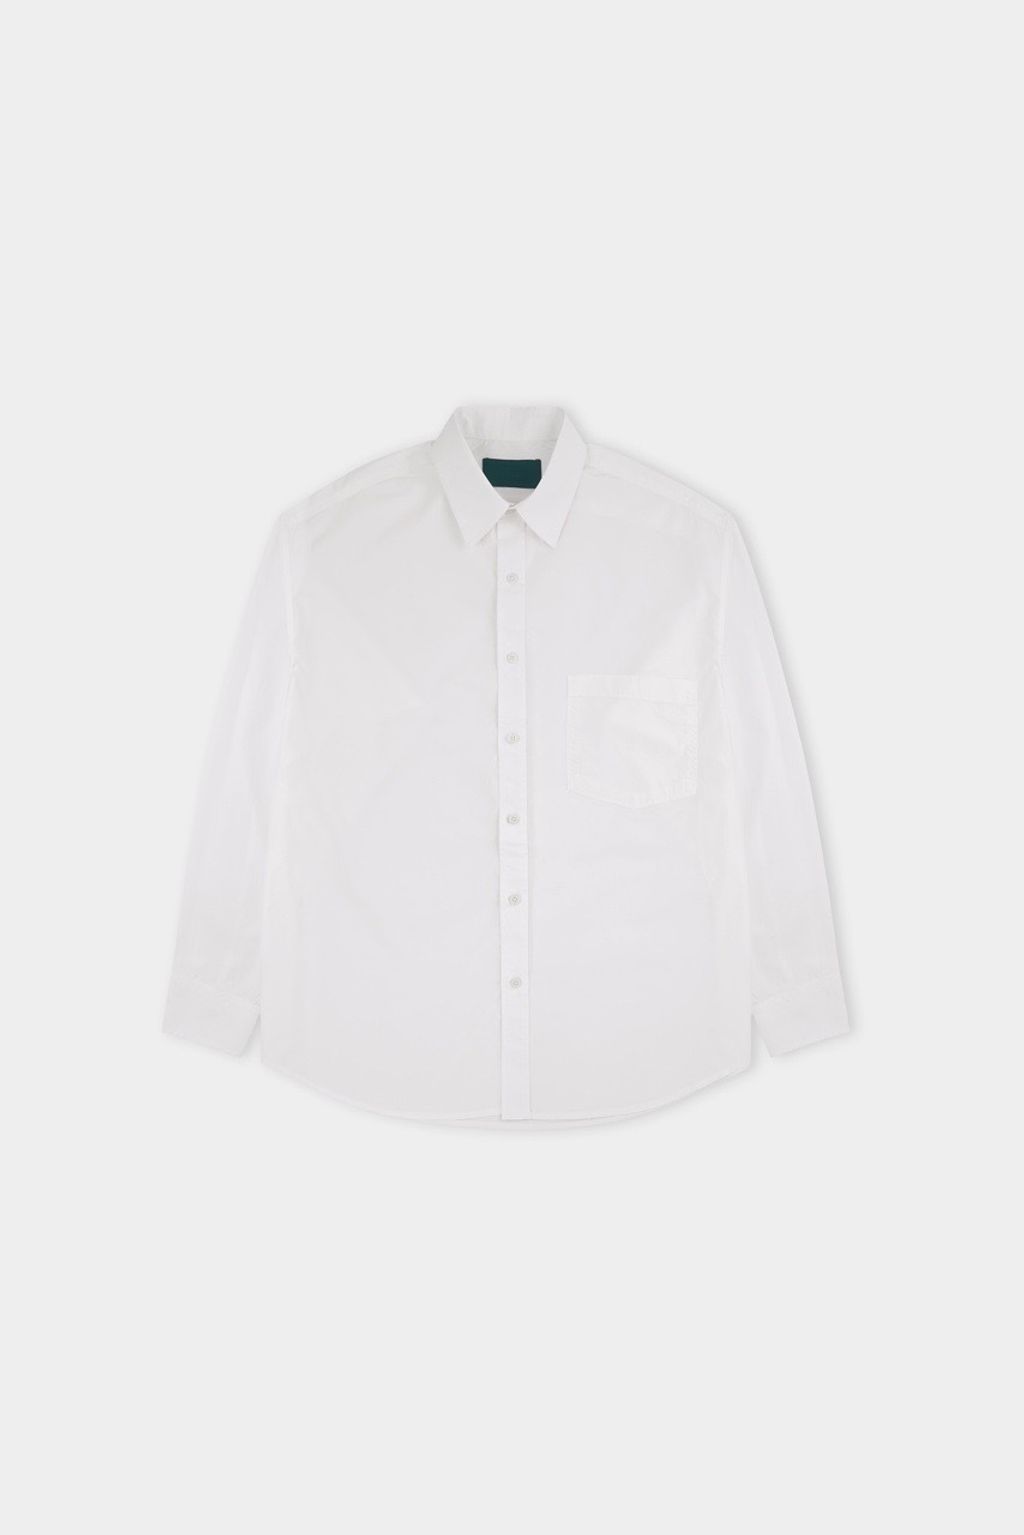 OPPAKOREA Comfy 口袋棉質襯衫 (3色) (優質高密度棉)